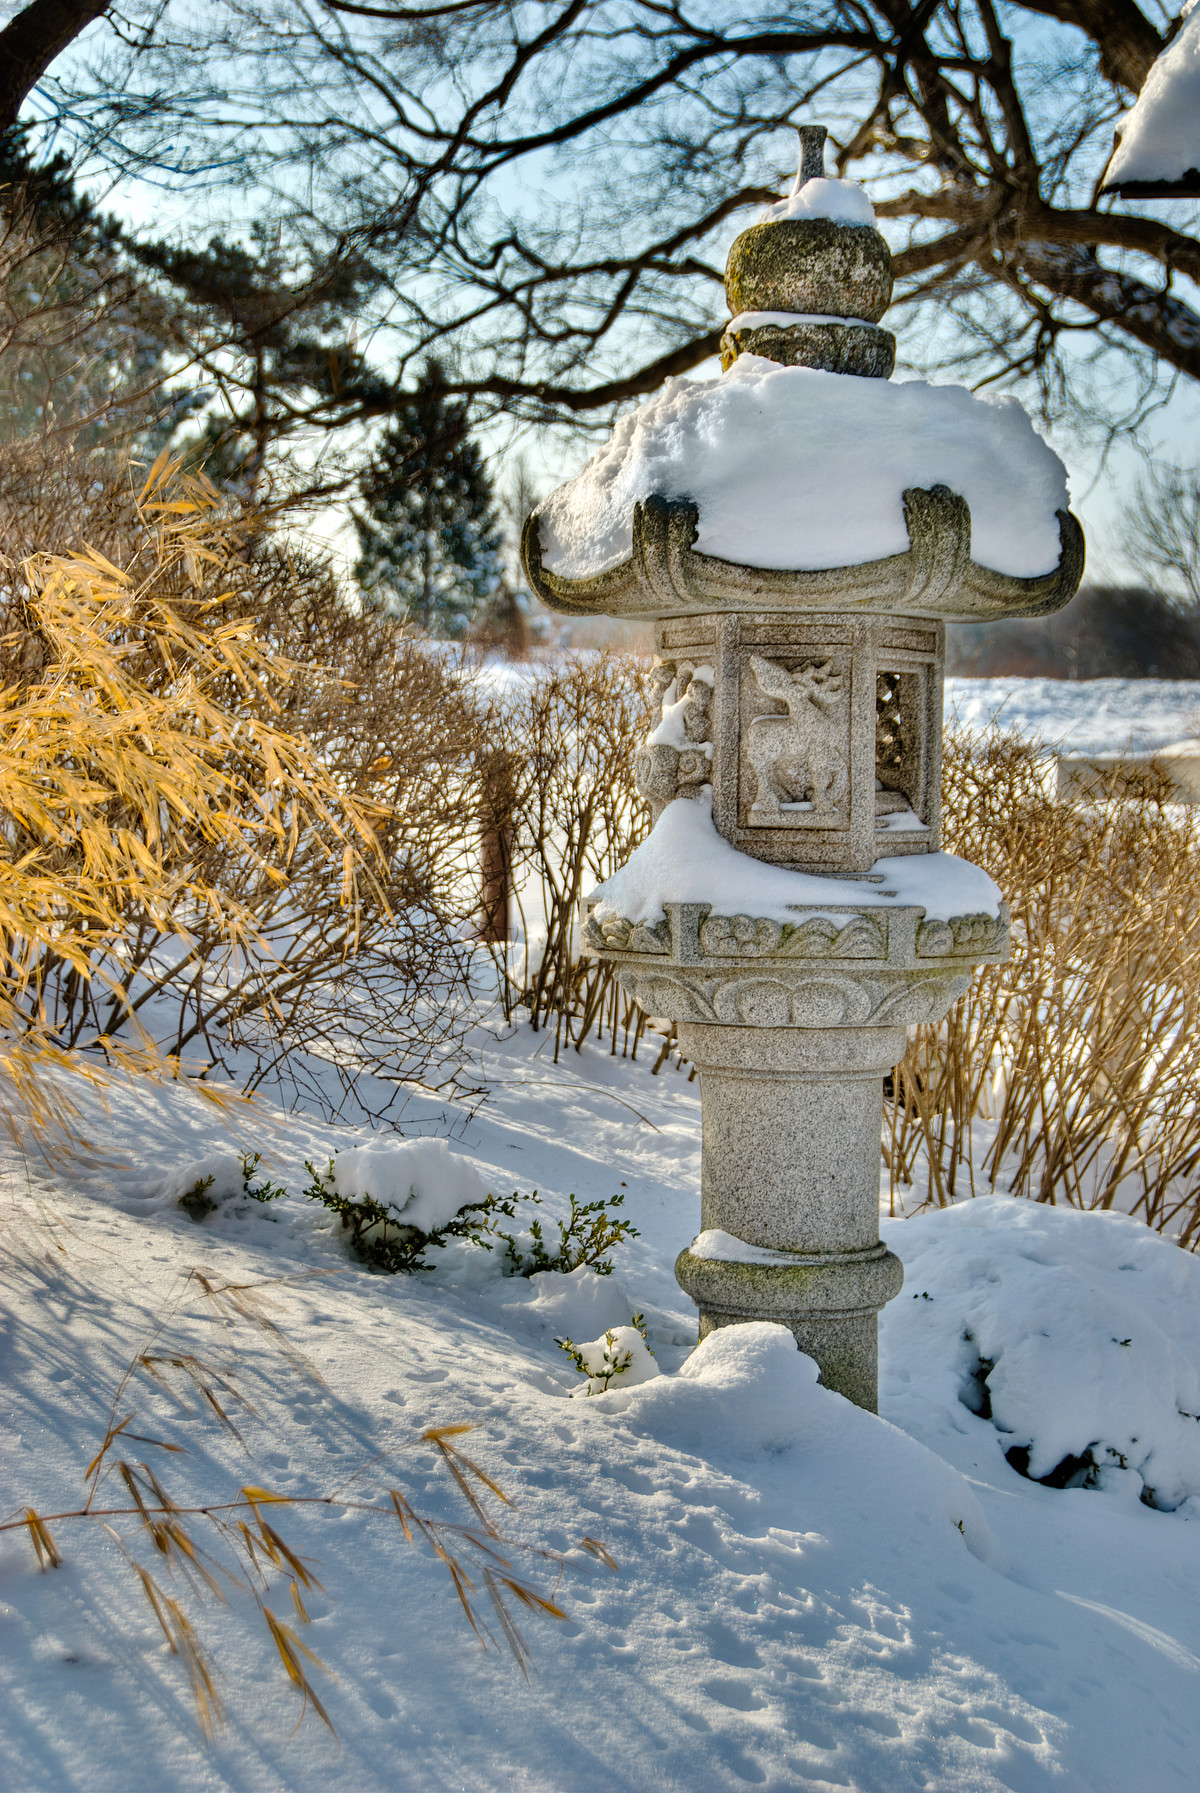 Stone lantern in snow